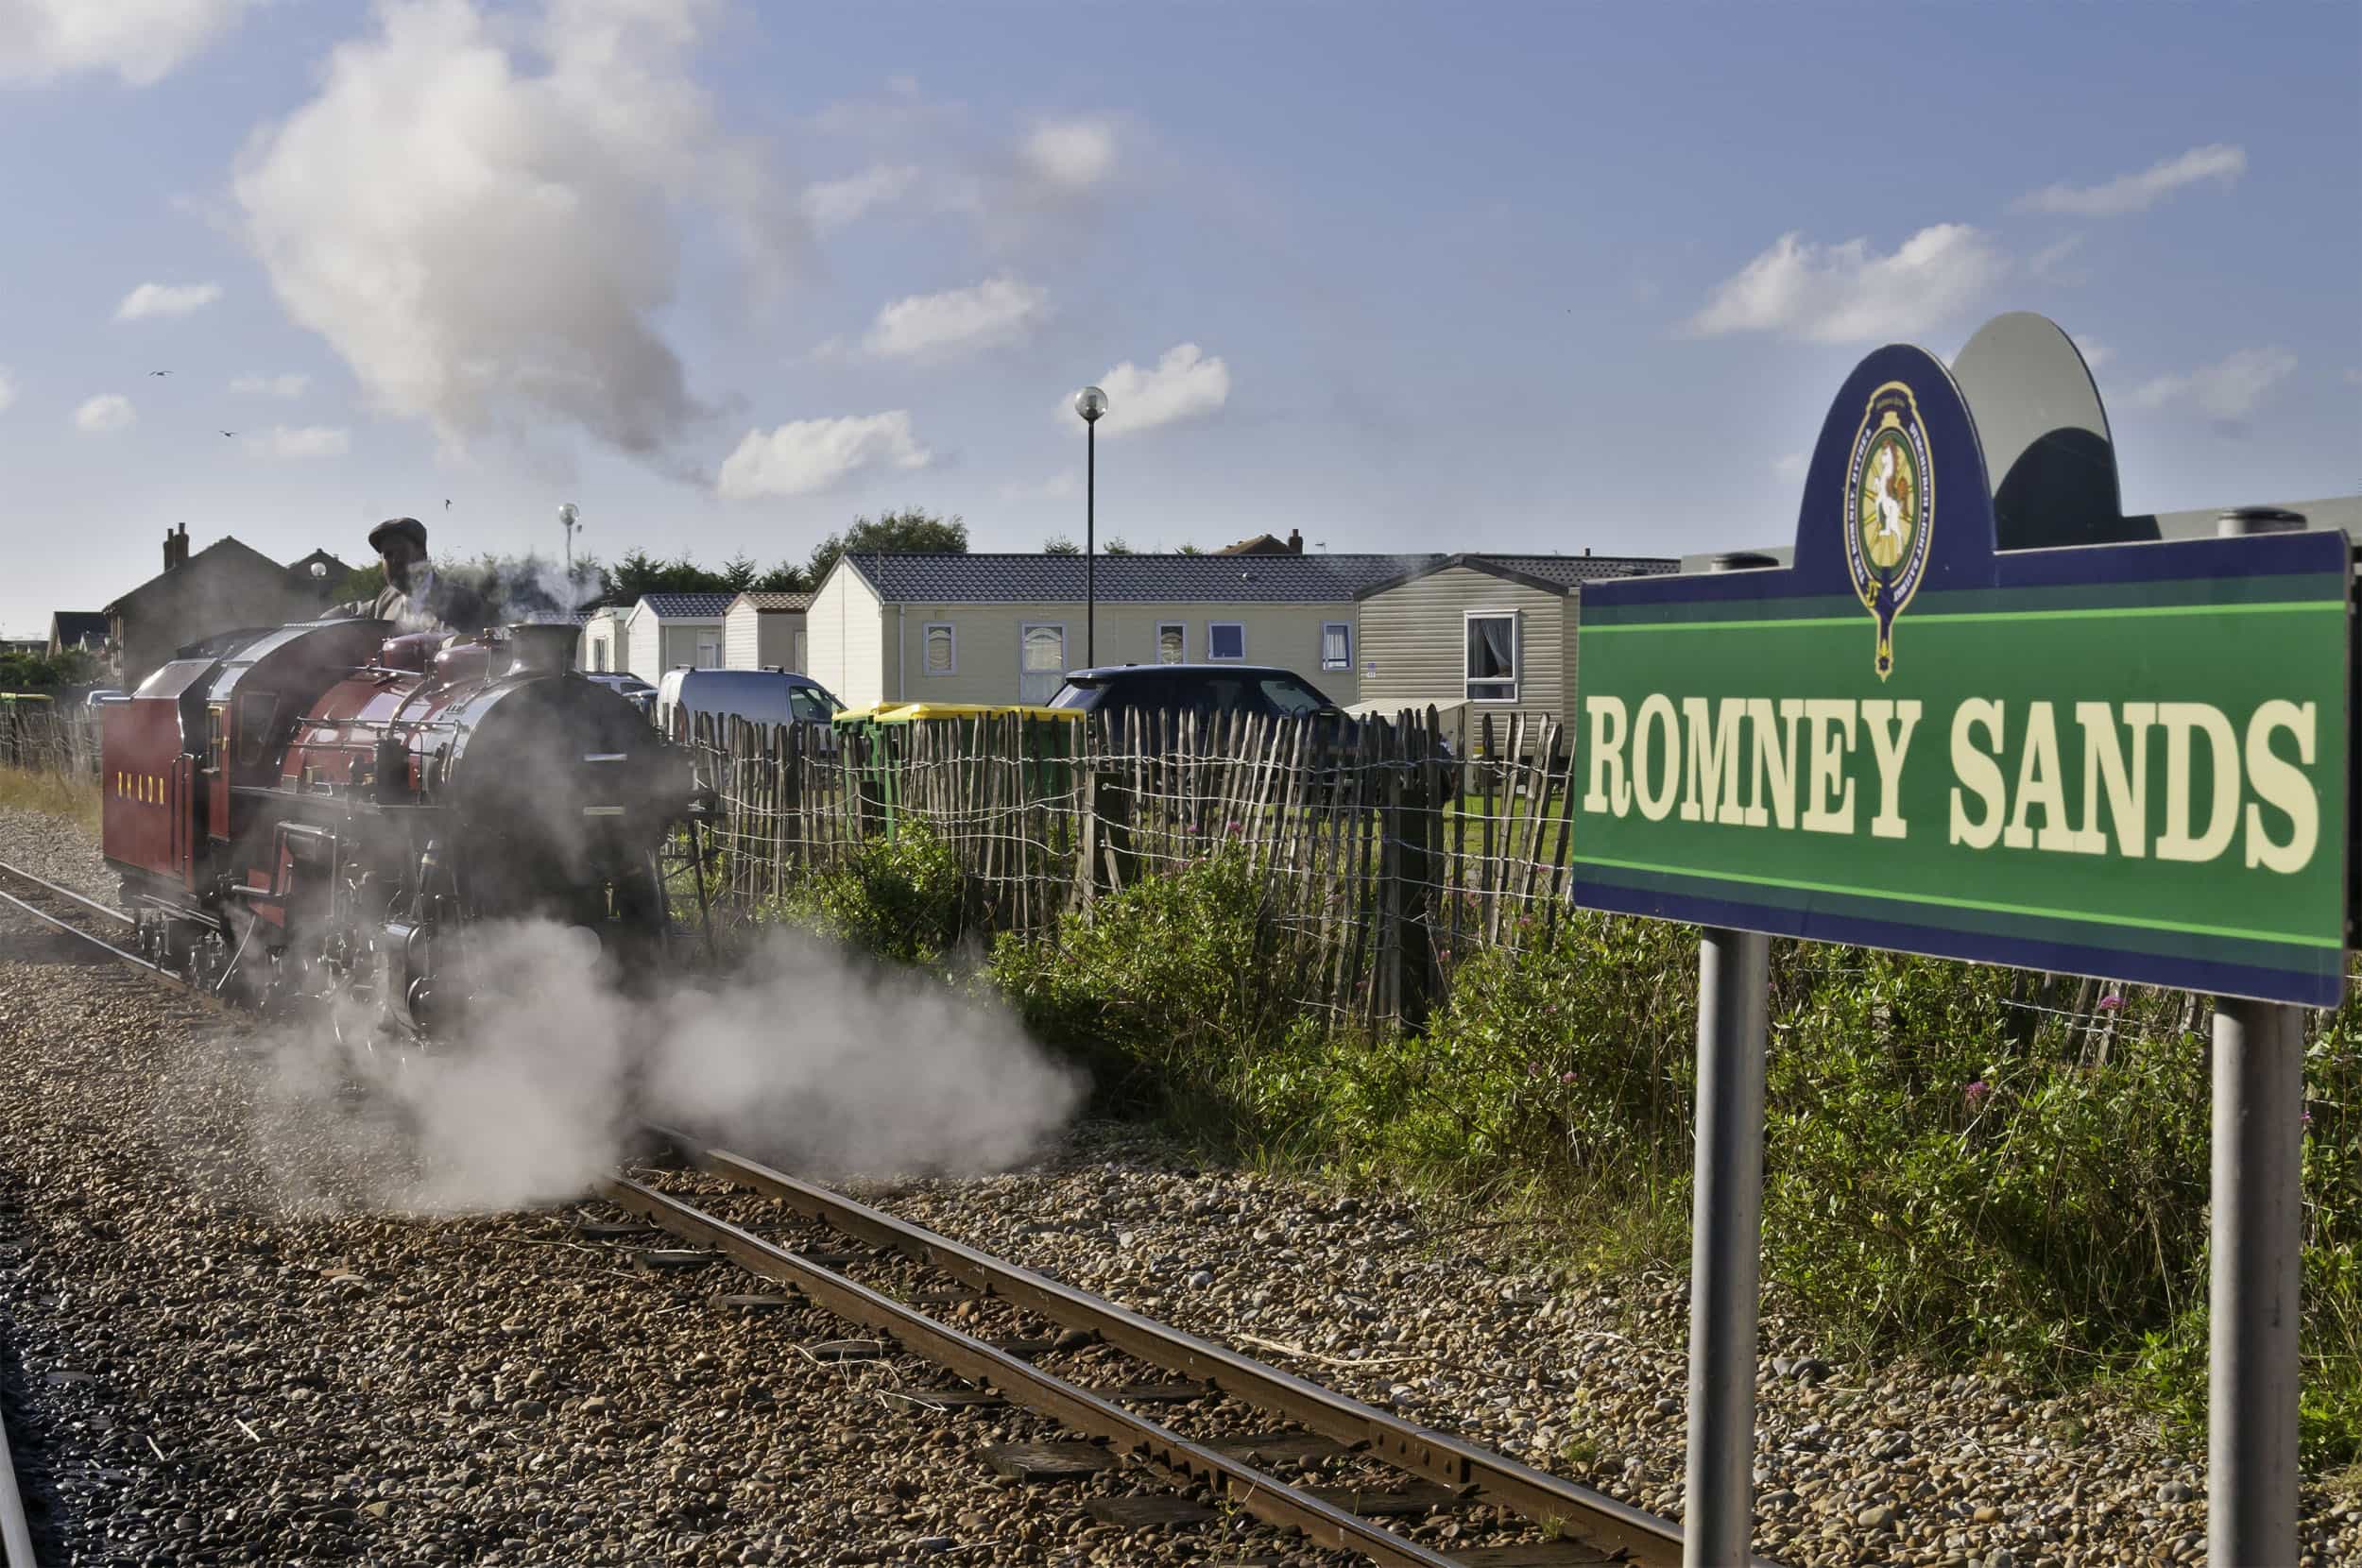 Romney Sands Station at Romney, Hythe & Dymchurch Railway